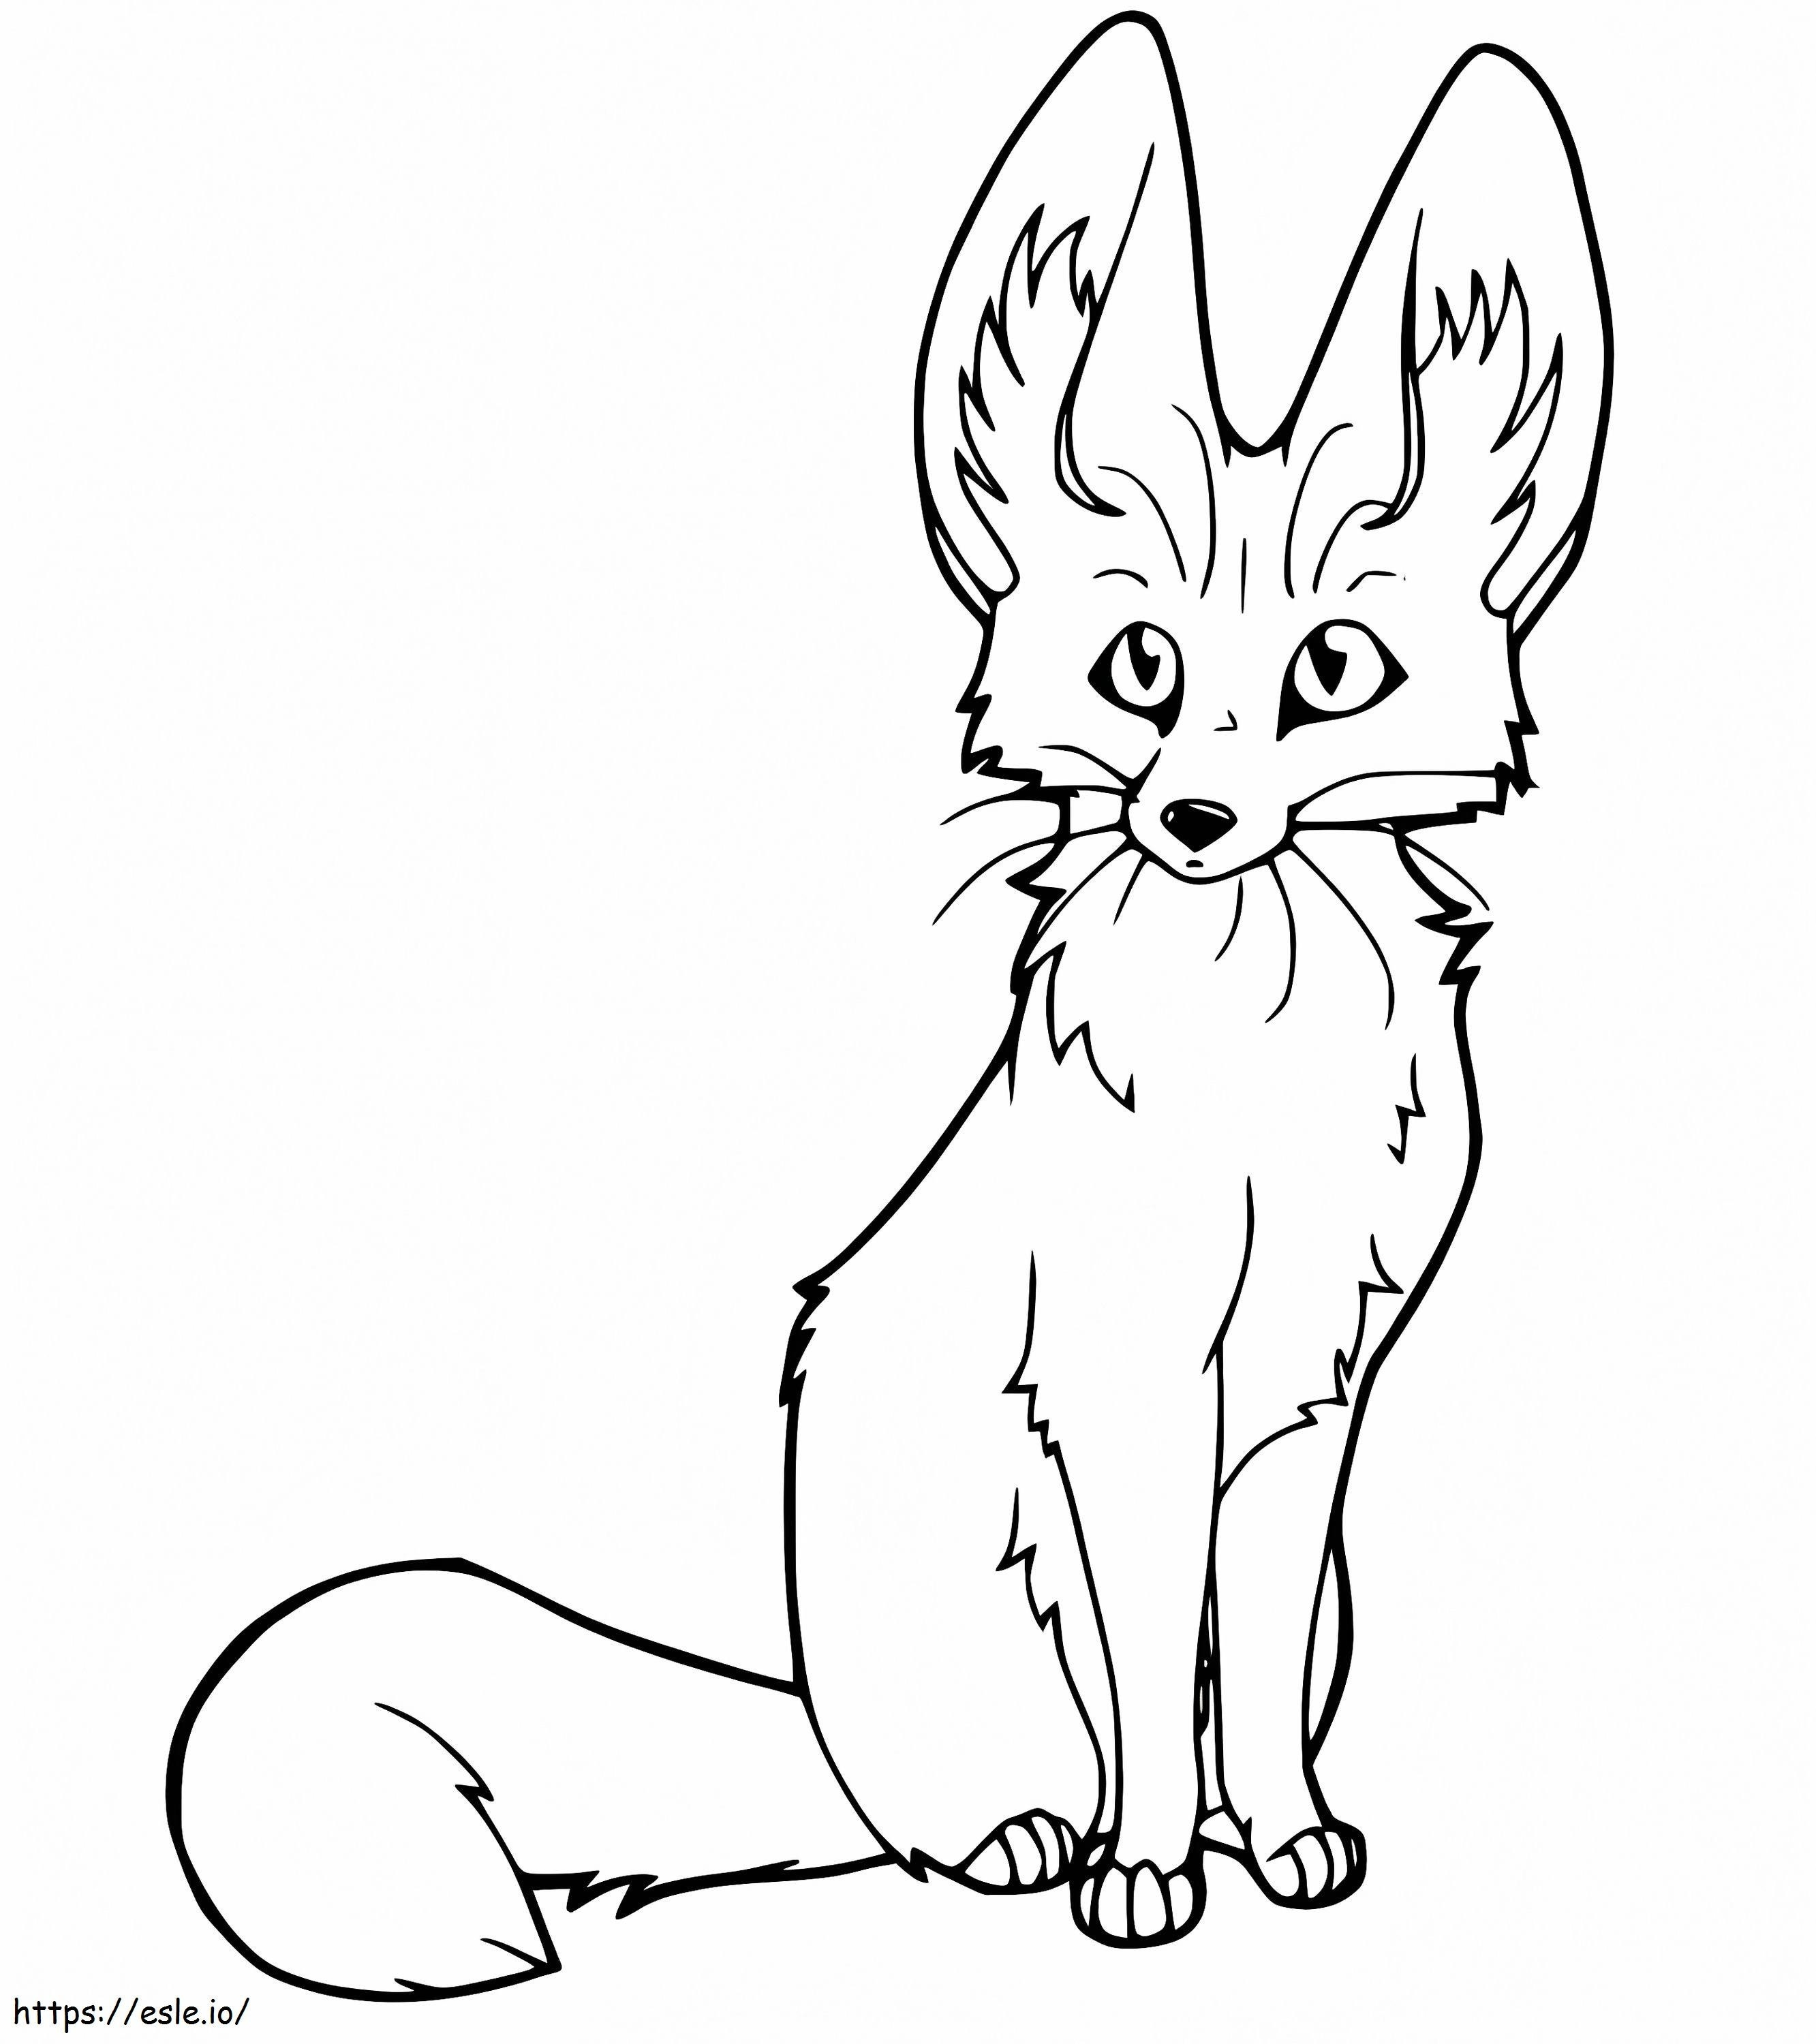 Confused Fennec Fox coloring page